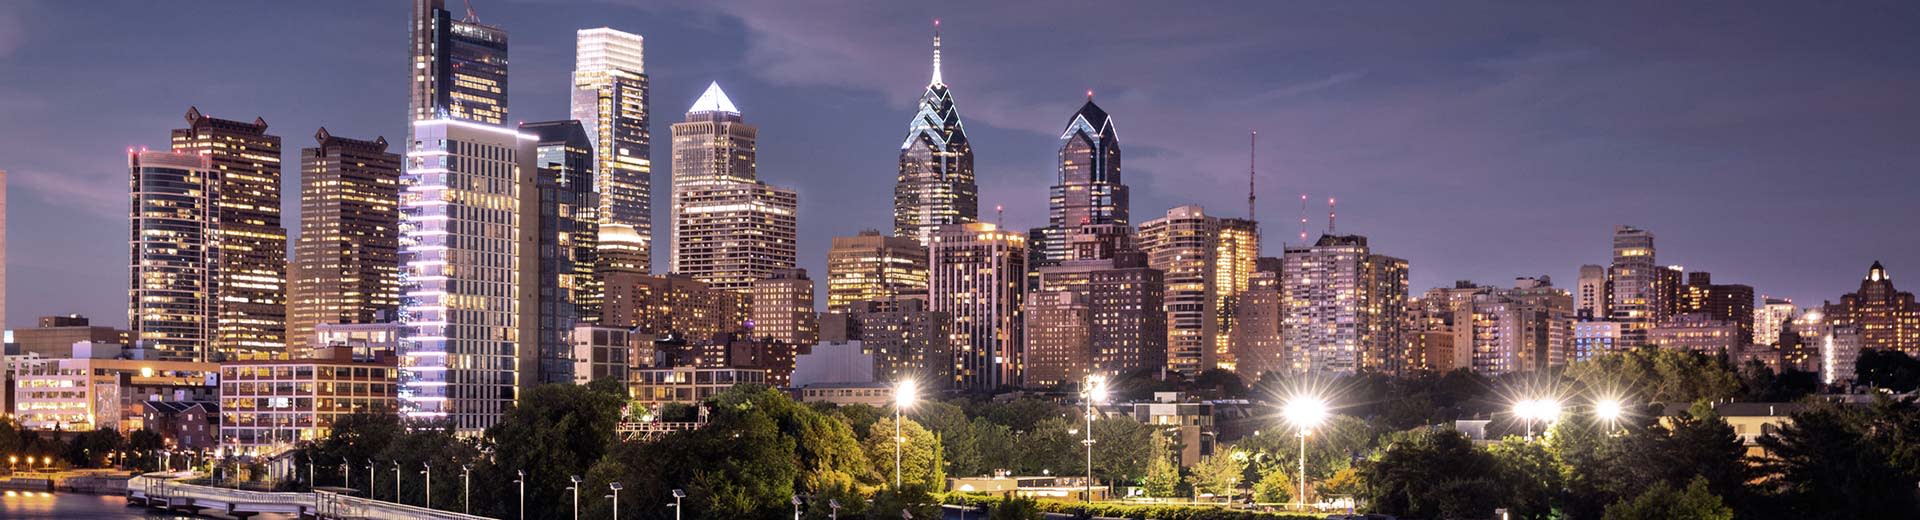 The high-rising Philadelphia skyline at night illuminates the dark sky above.